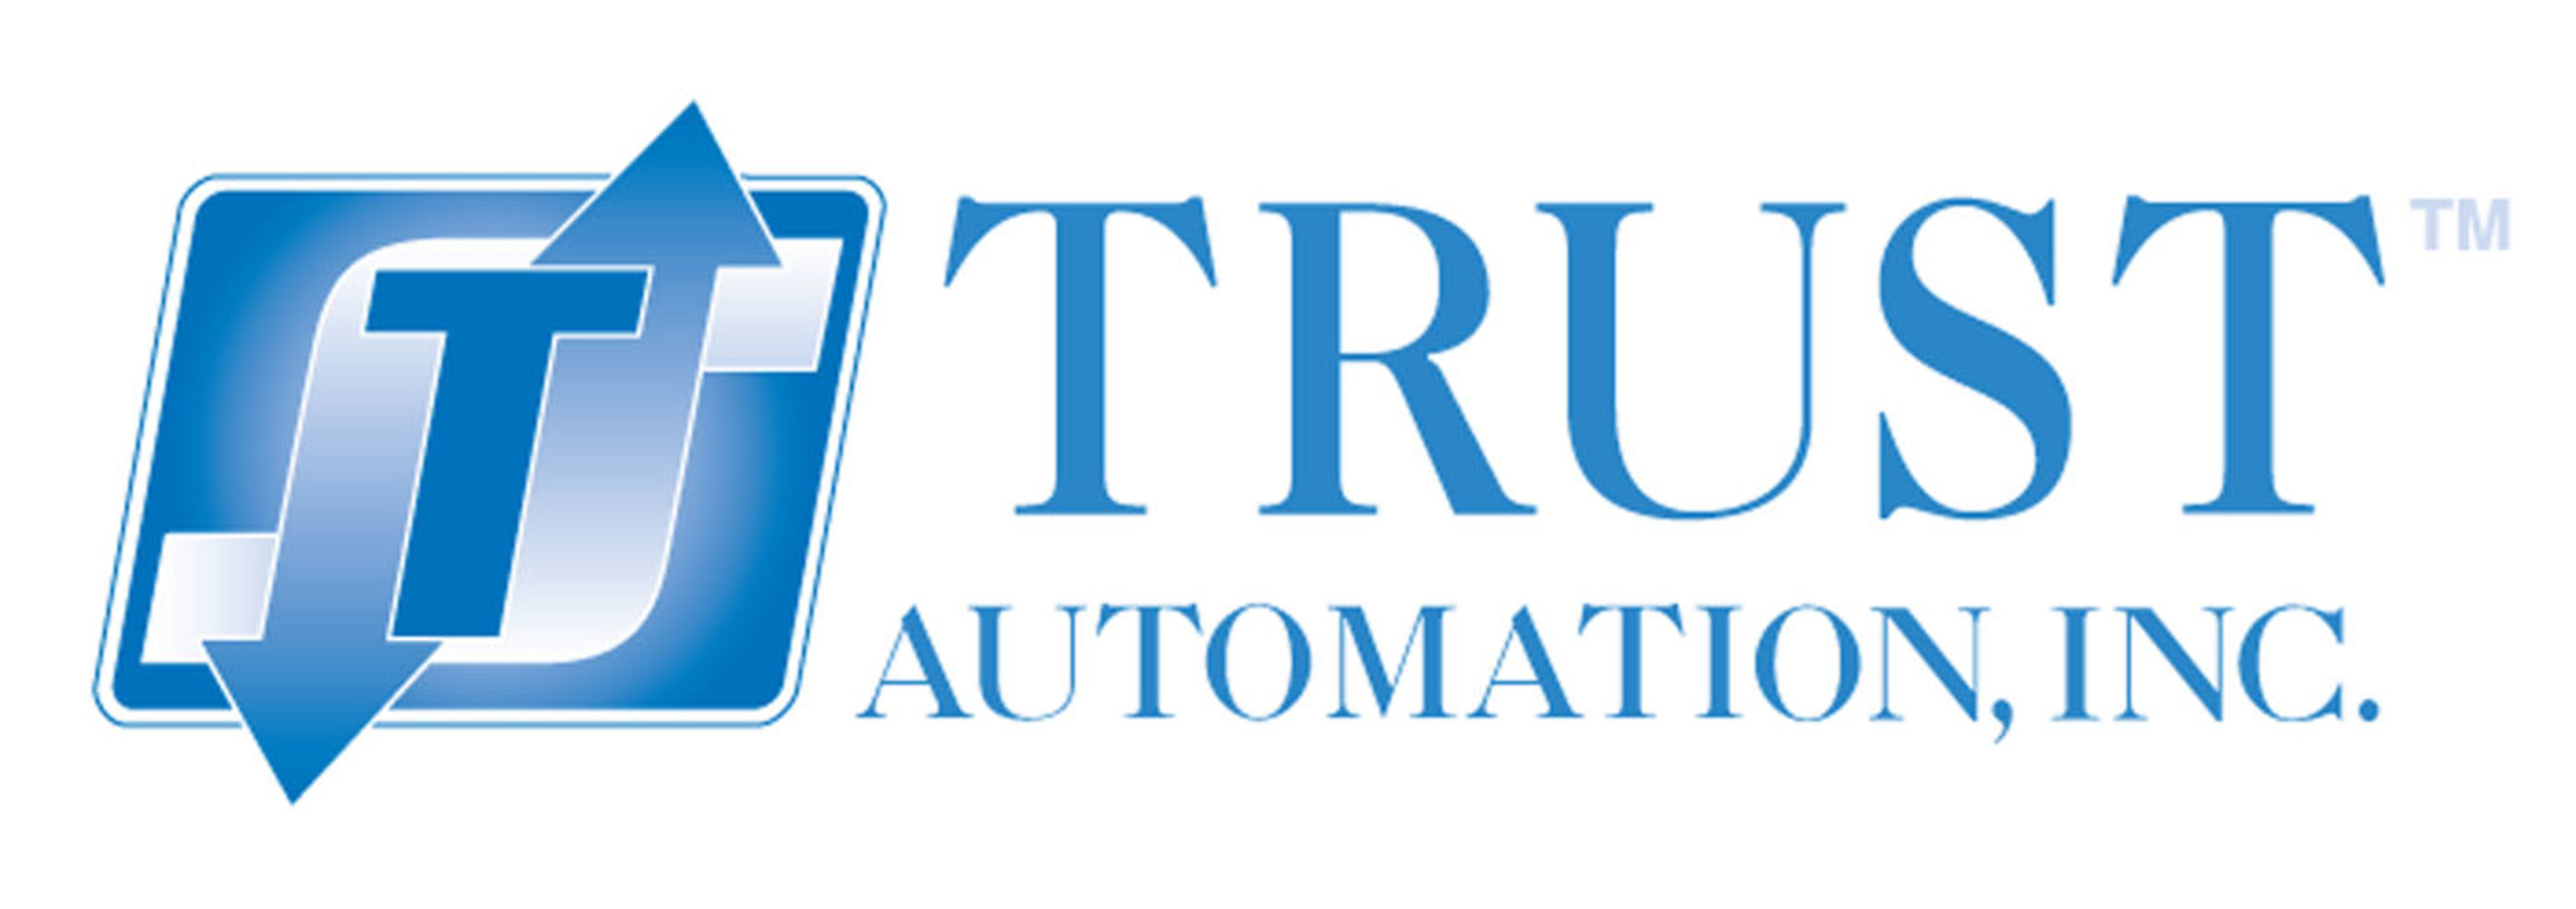 Trust Automation, Inc. Logo.